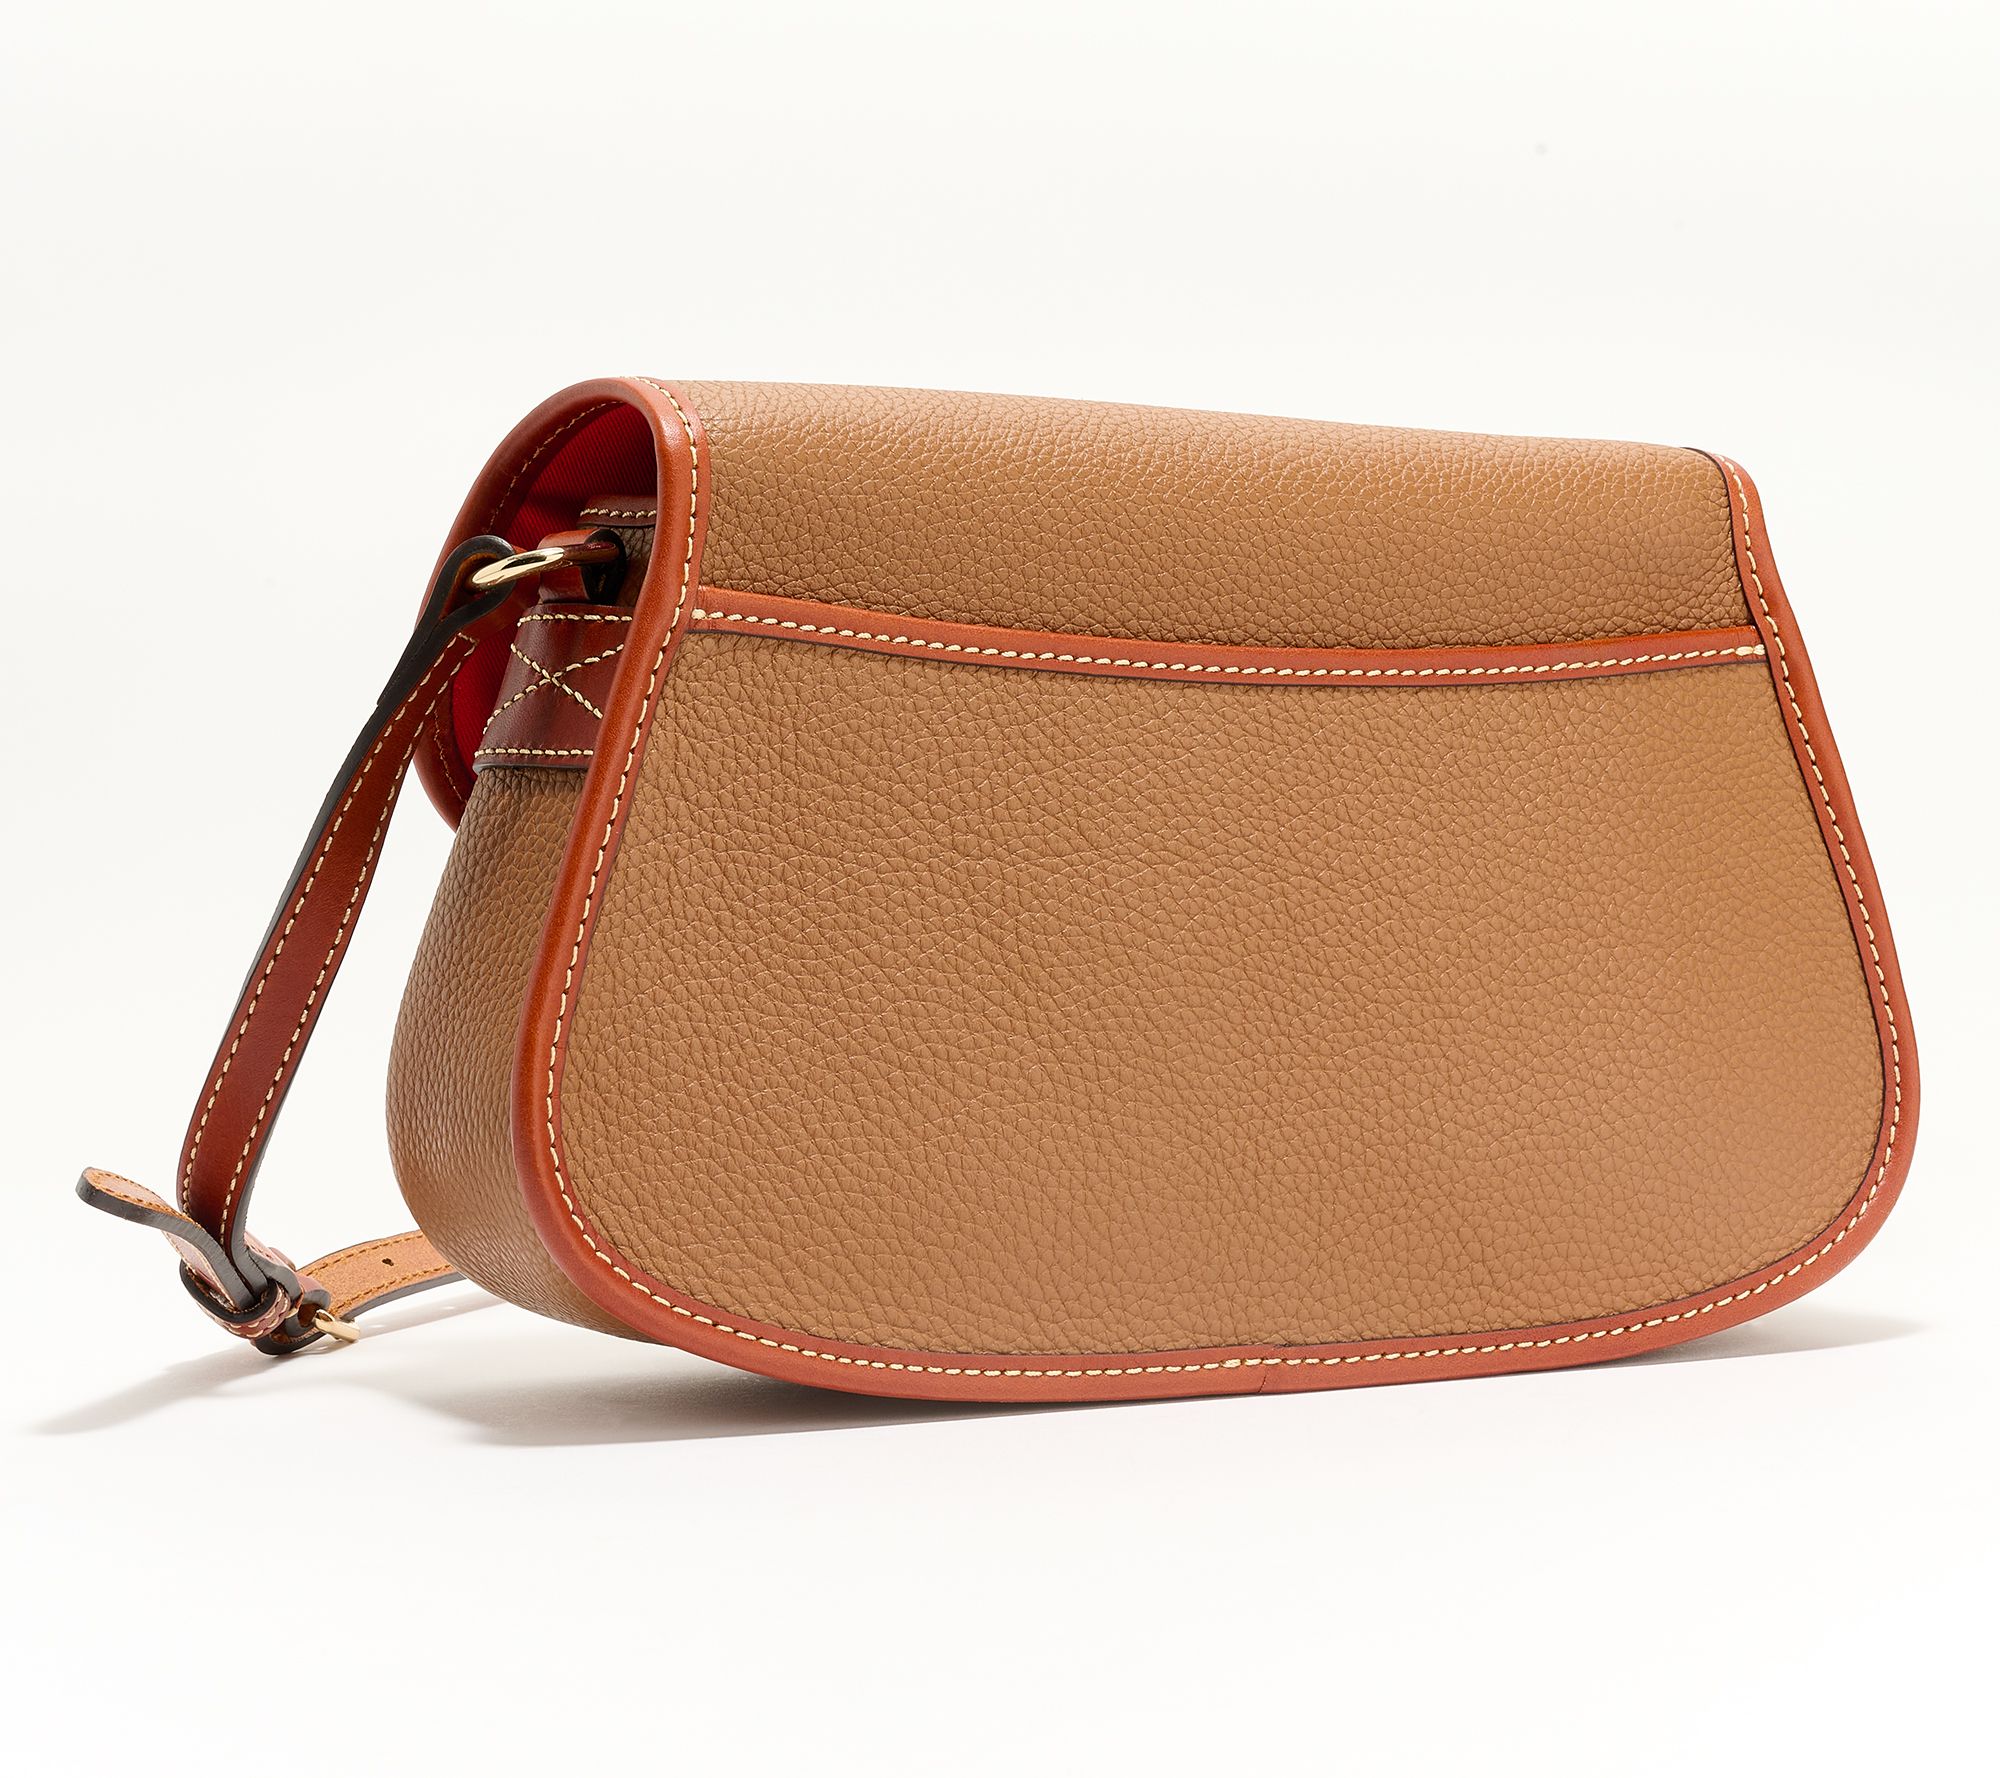 Dooney & Bourke Pebble Leather Ellie Crossbody Bag